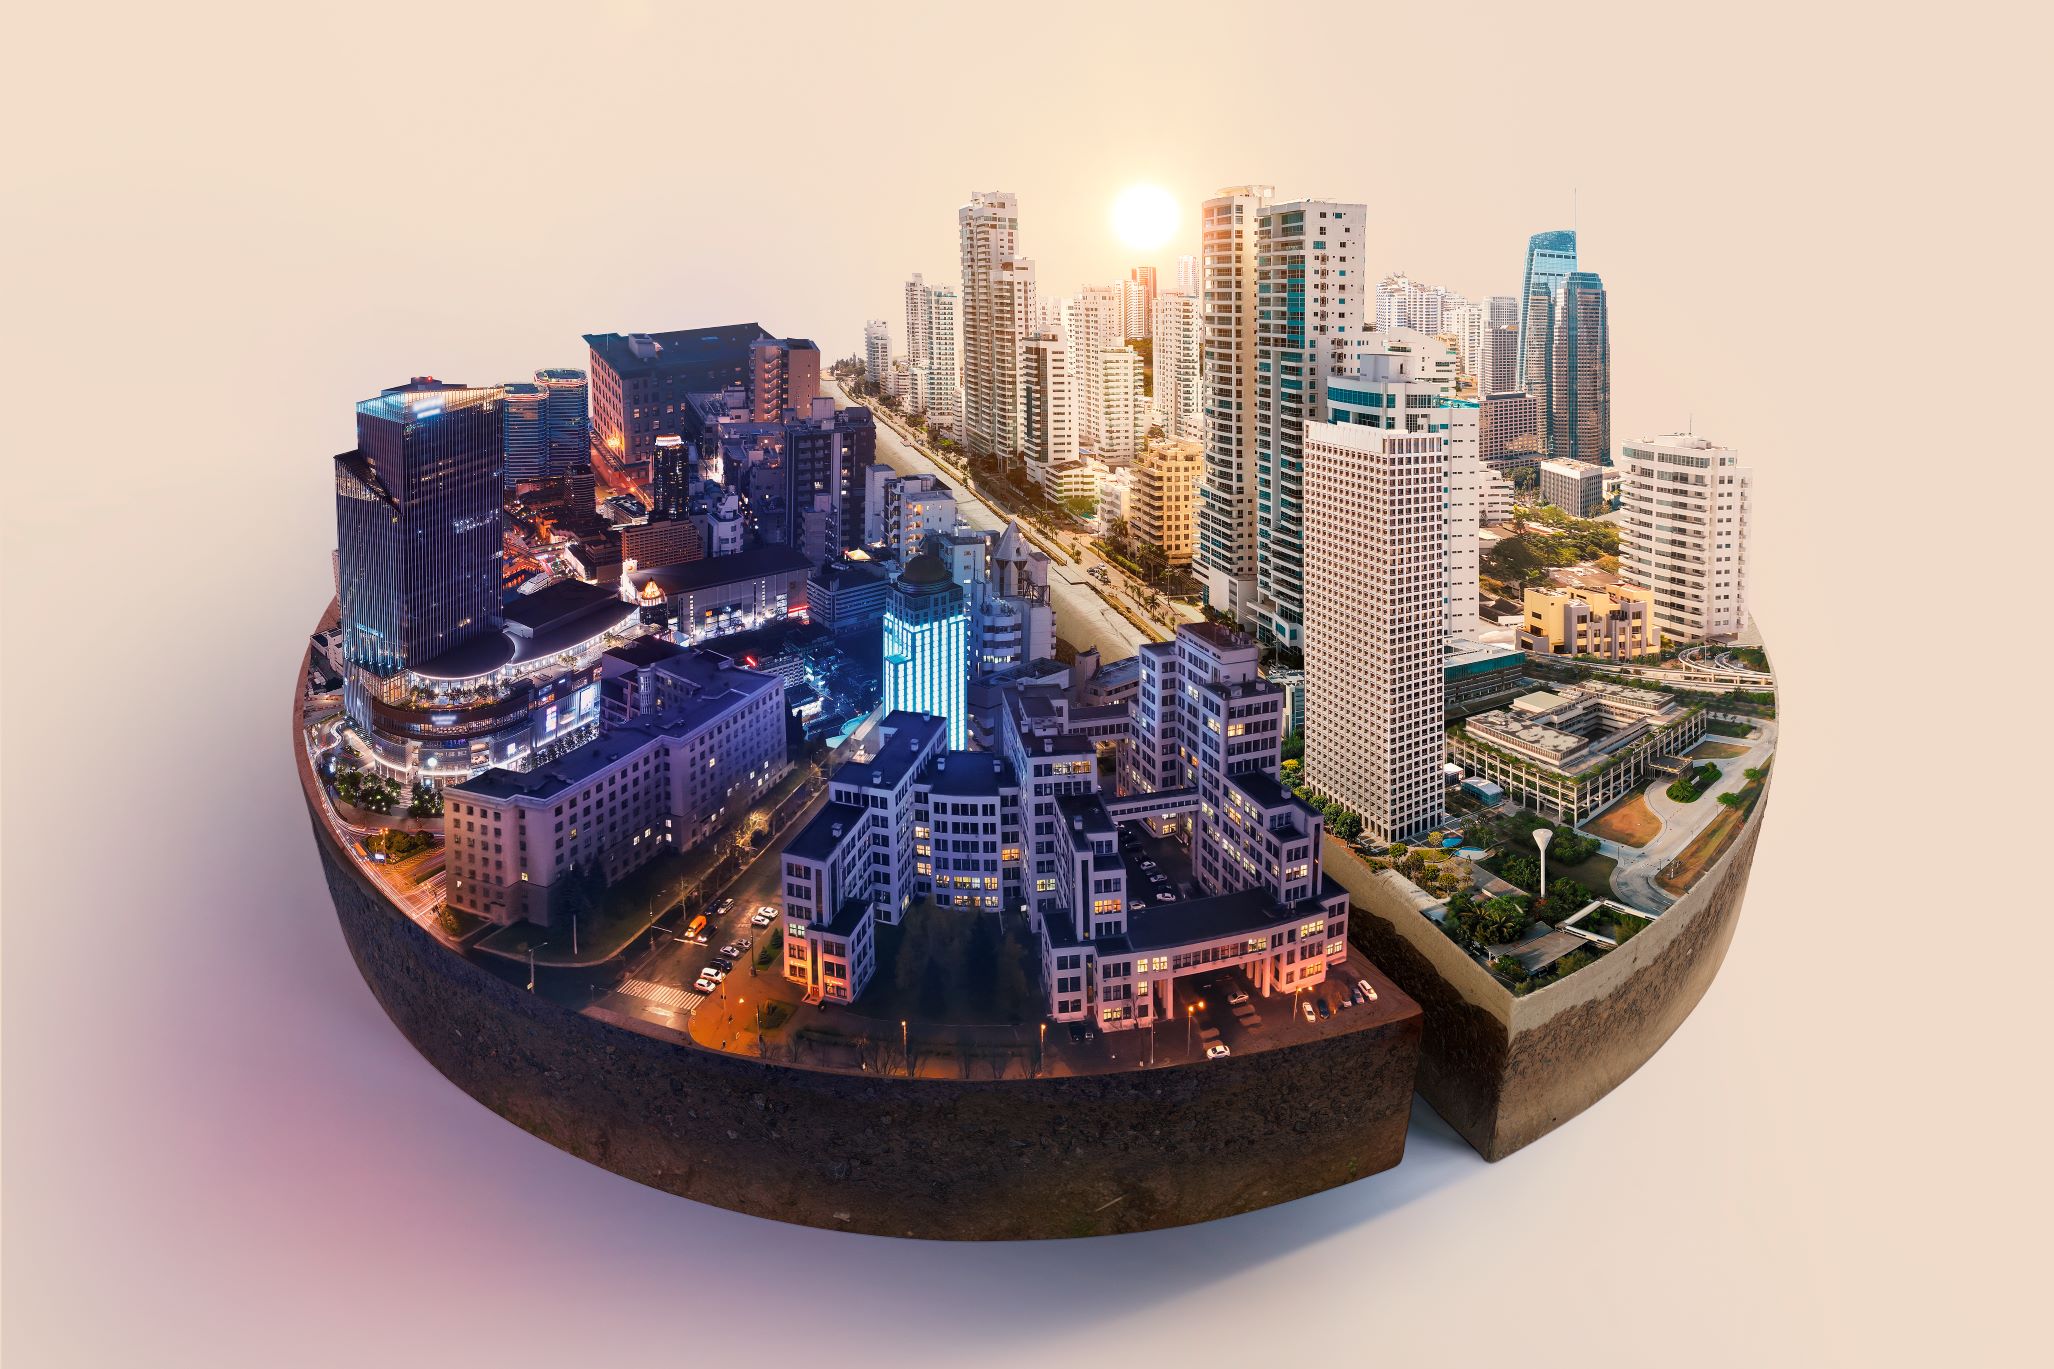 Singapore Real Estate Market Outlook 2023